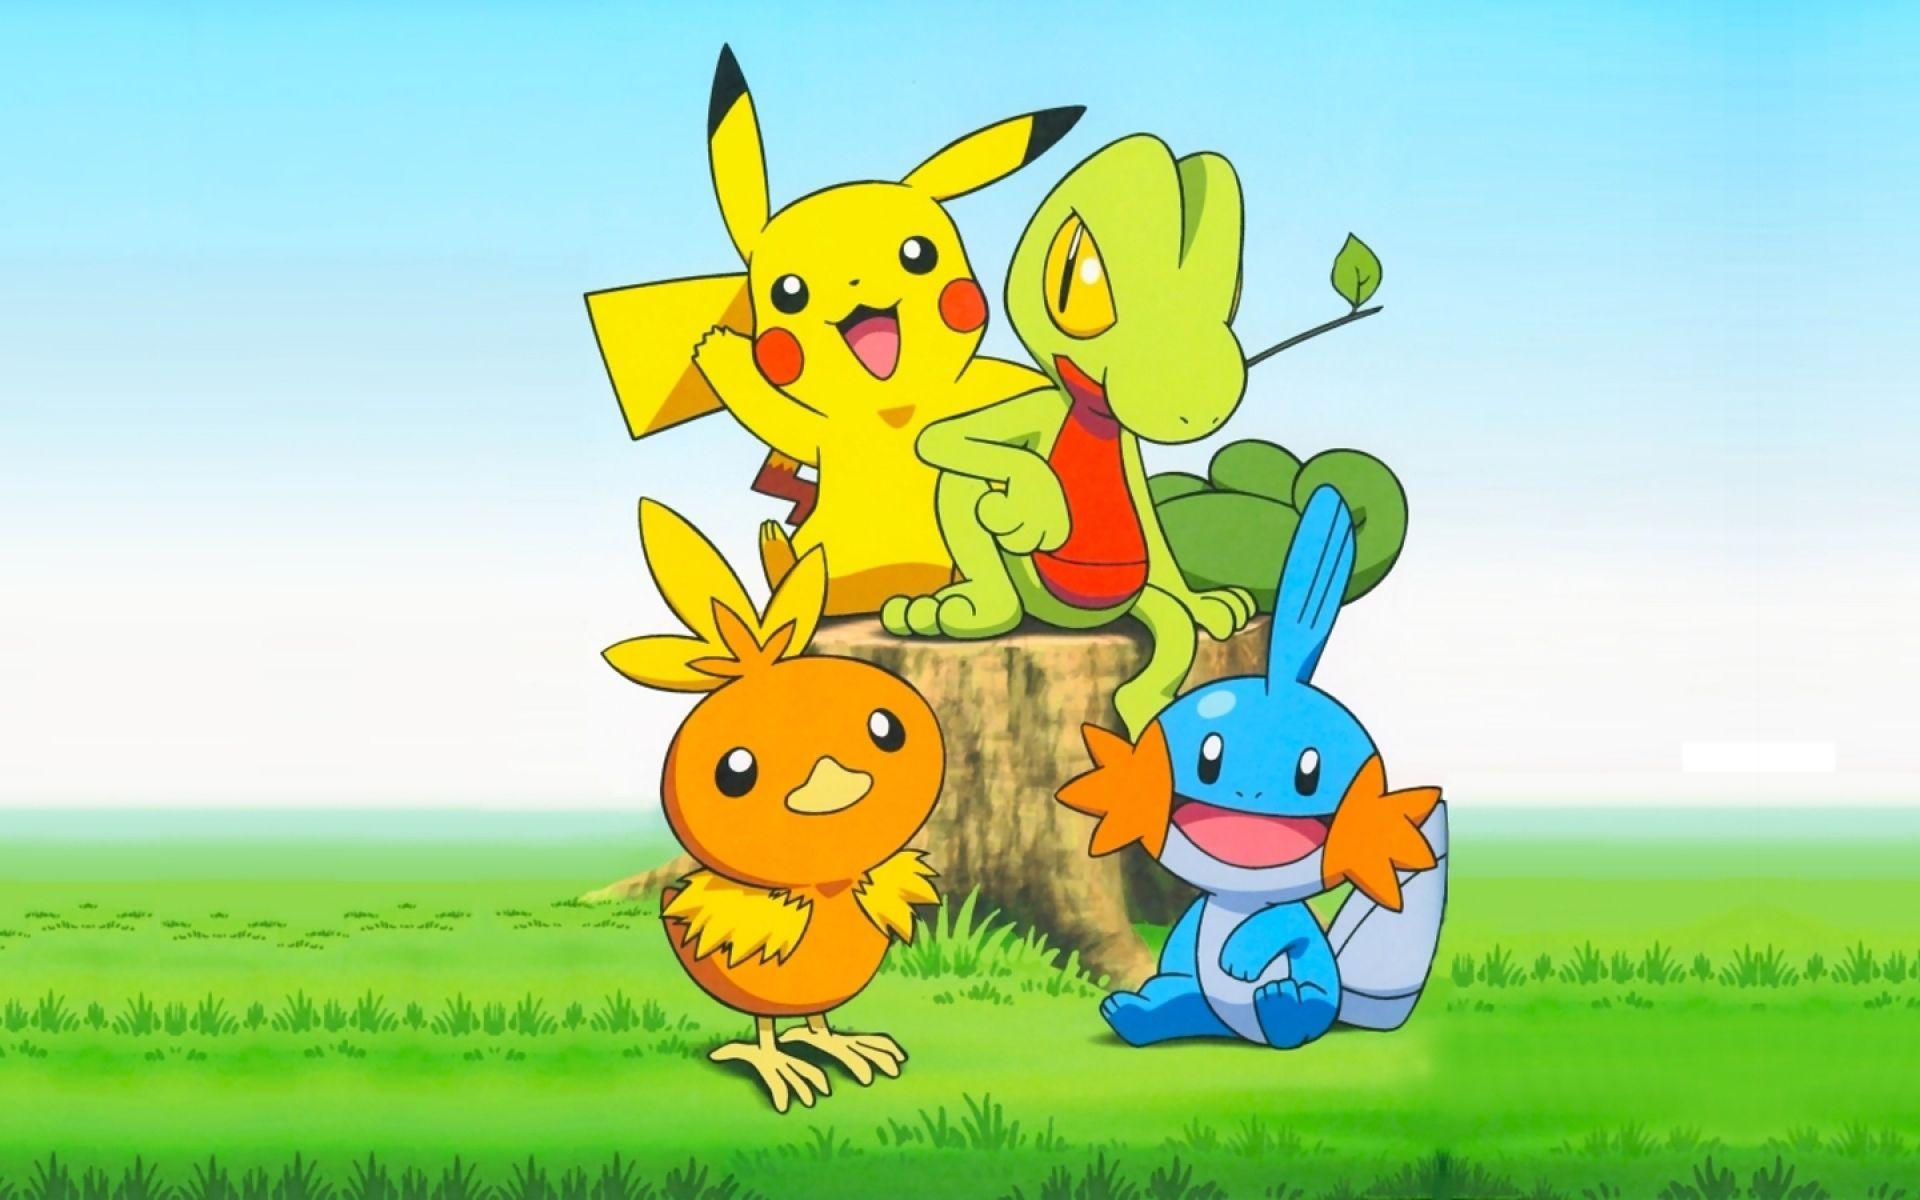 Treecko (Pokémon) HD Wallpaper and Background Image